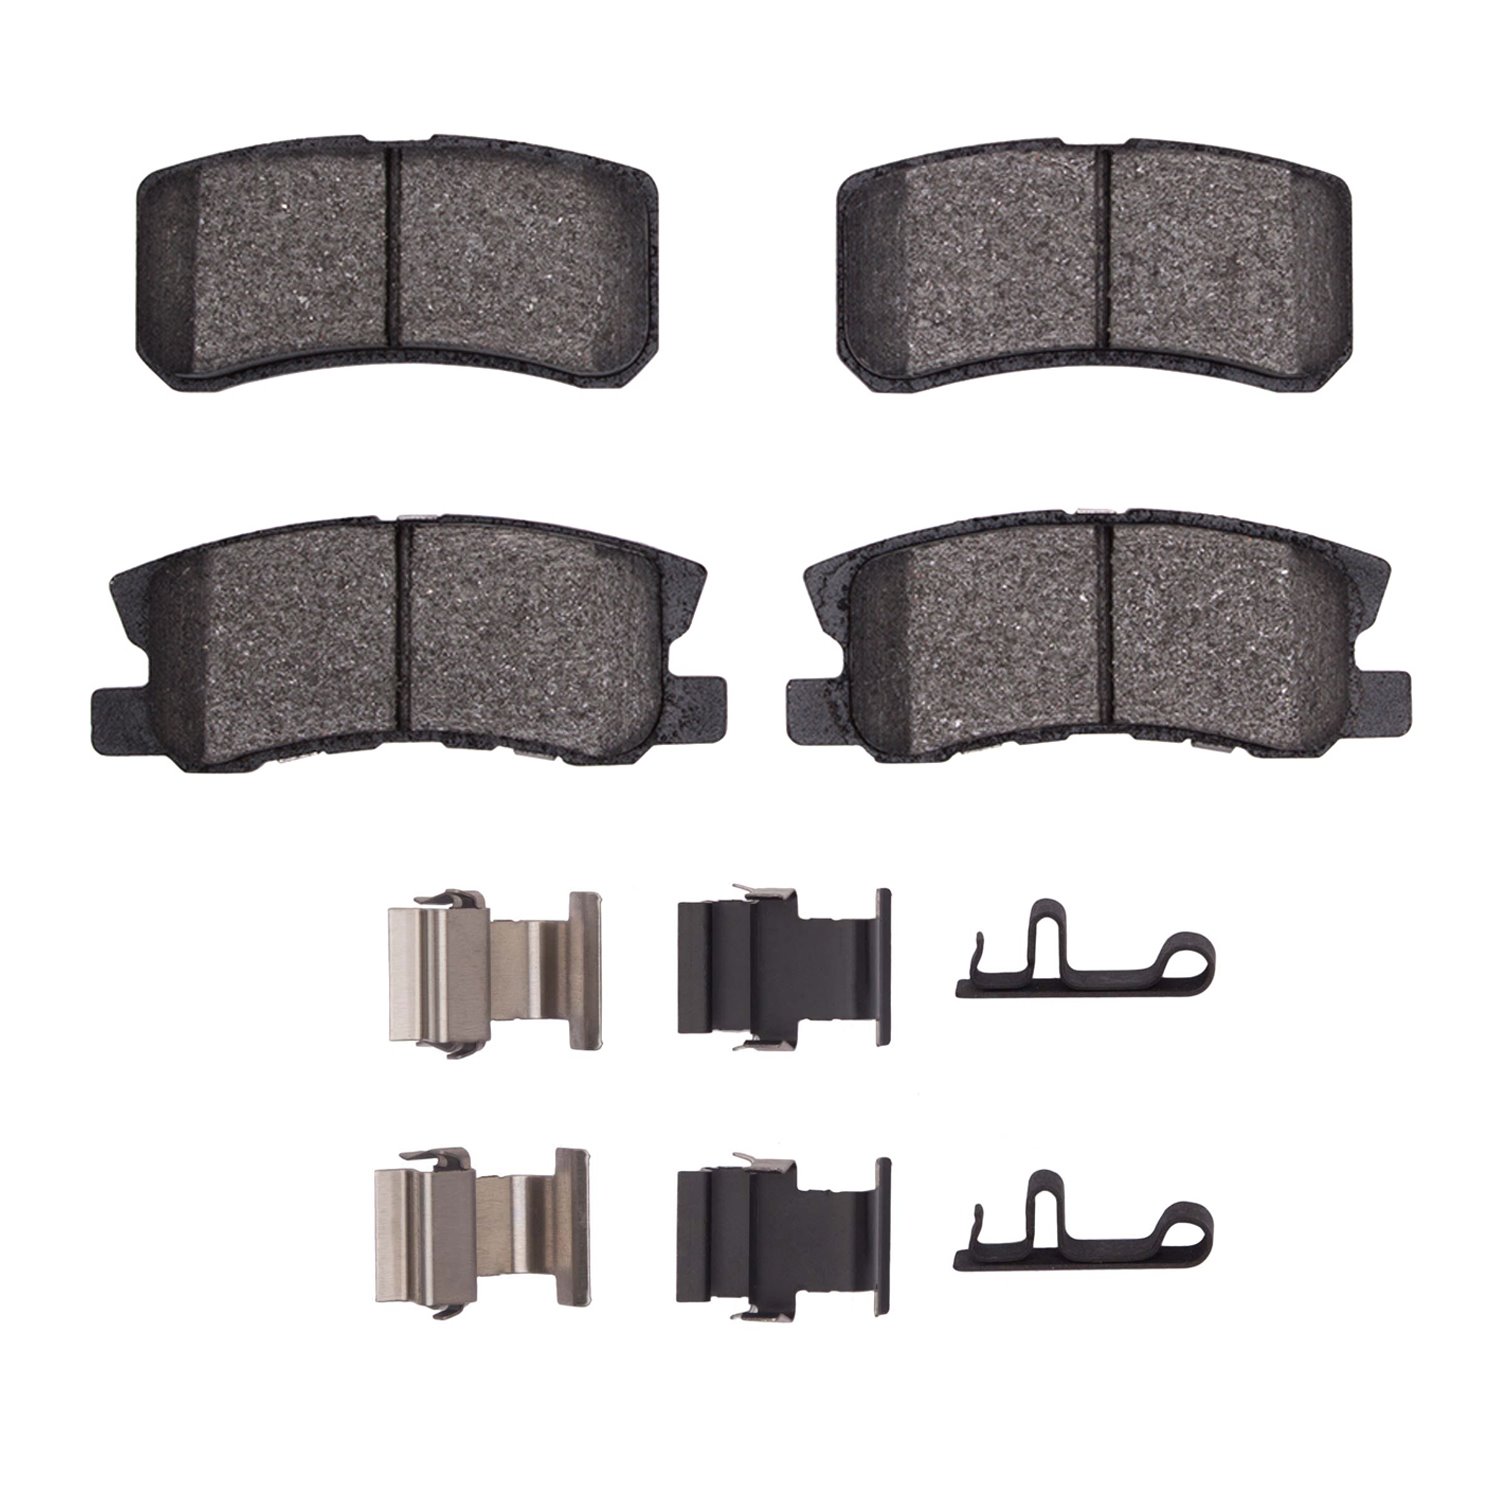 Ceramic Brake Pads & Hardware Kit, 2000-2017 Fits Multiple Makes/Models, Position: Rear